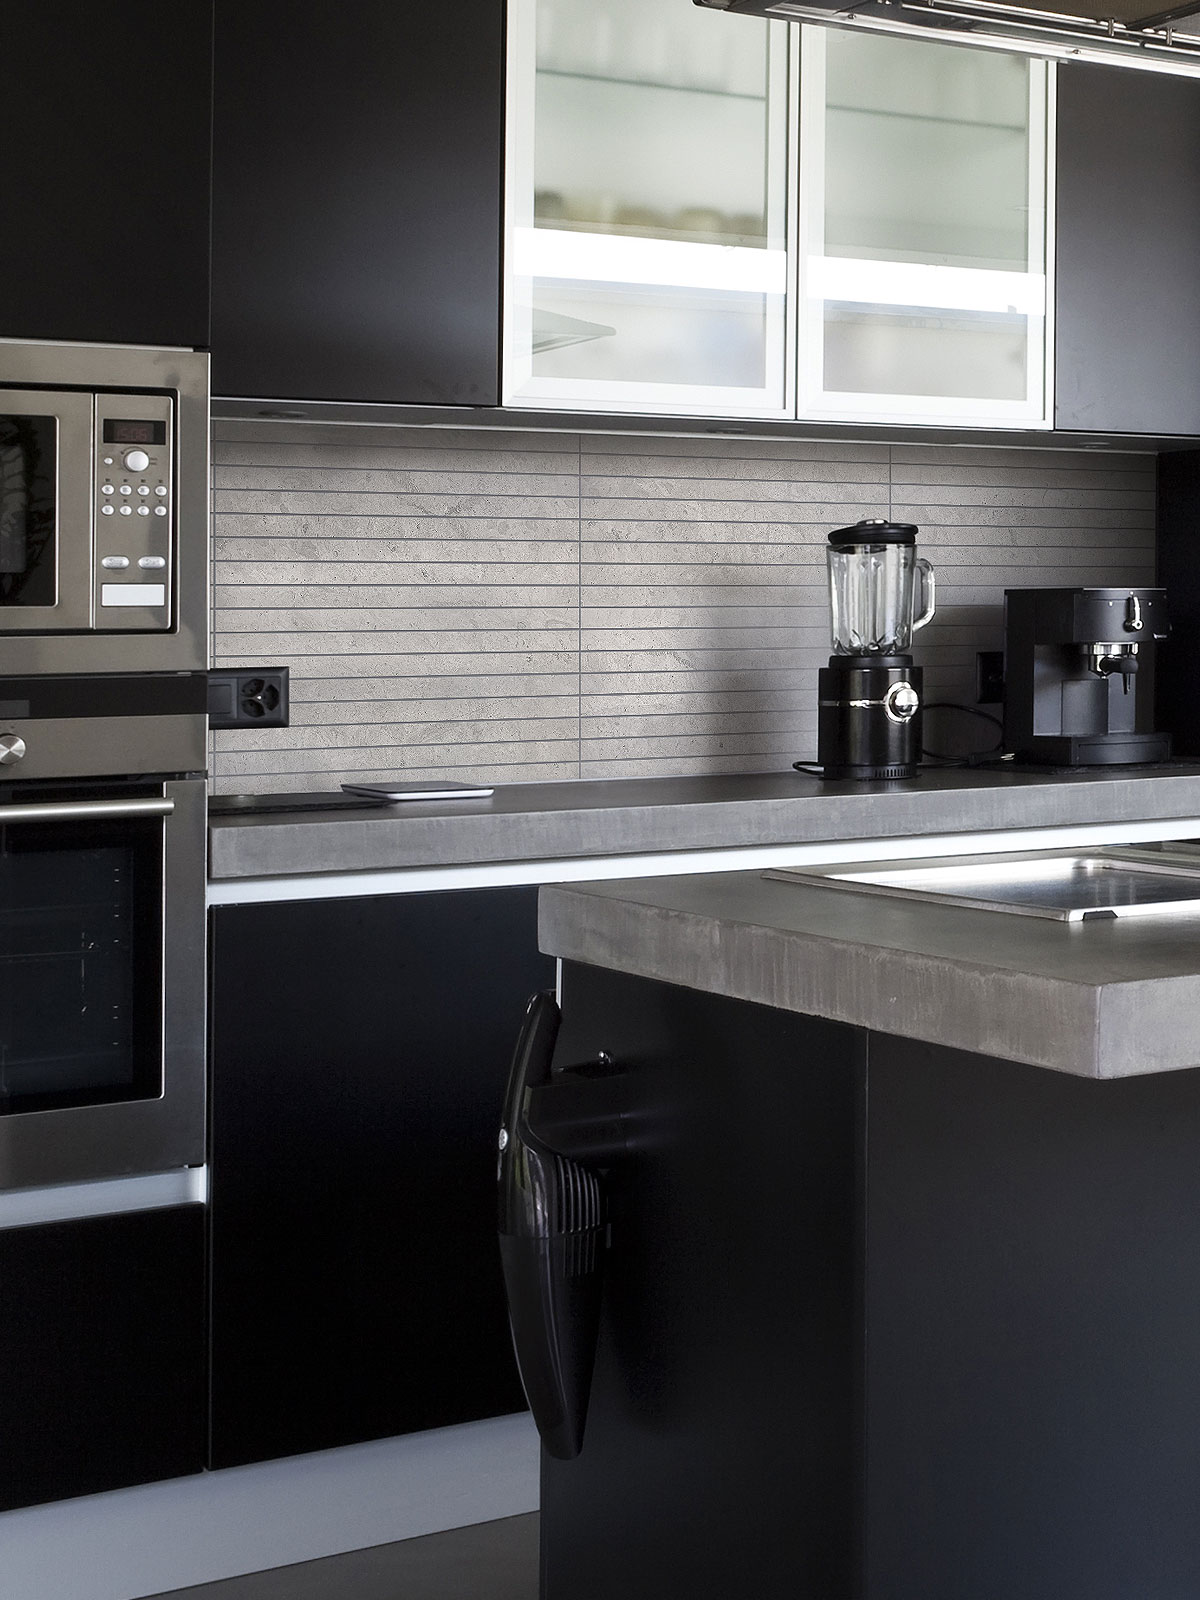 Black kitchen cabinets gray countertop backsplash tile BA1038 #graybacksplash #limestonebacksplash #modernbacksplash #modernkitchen #graykitchen #graycabinetbacksplash